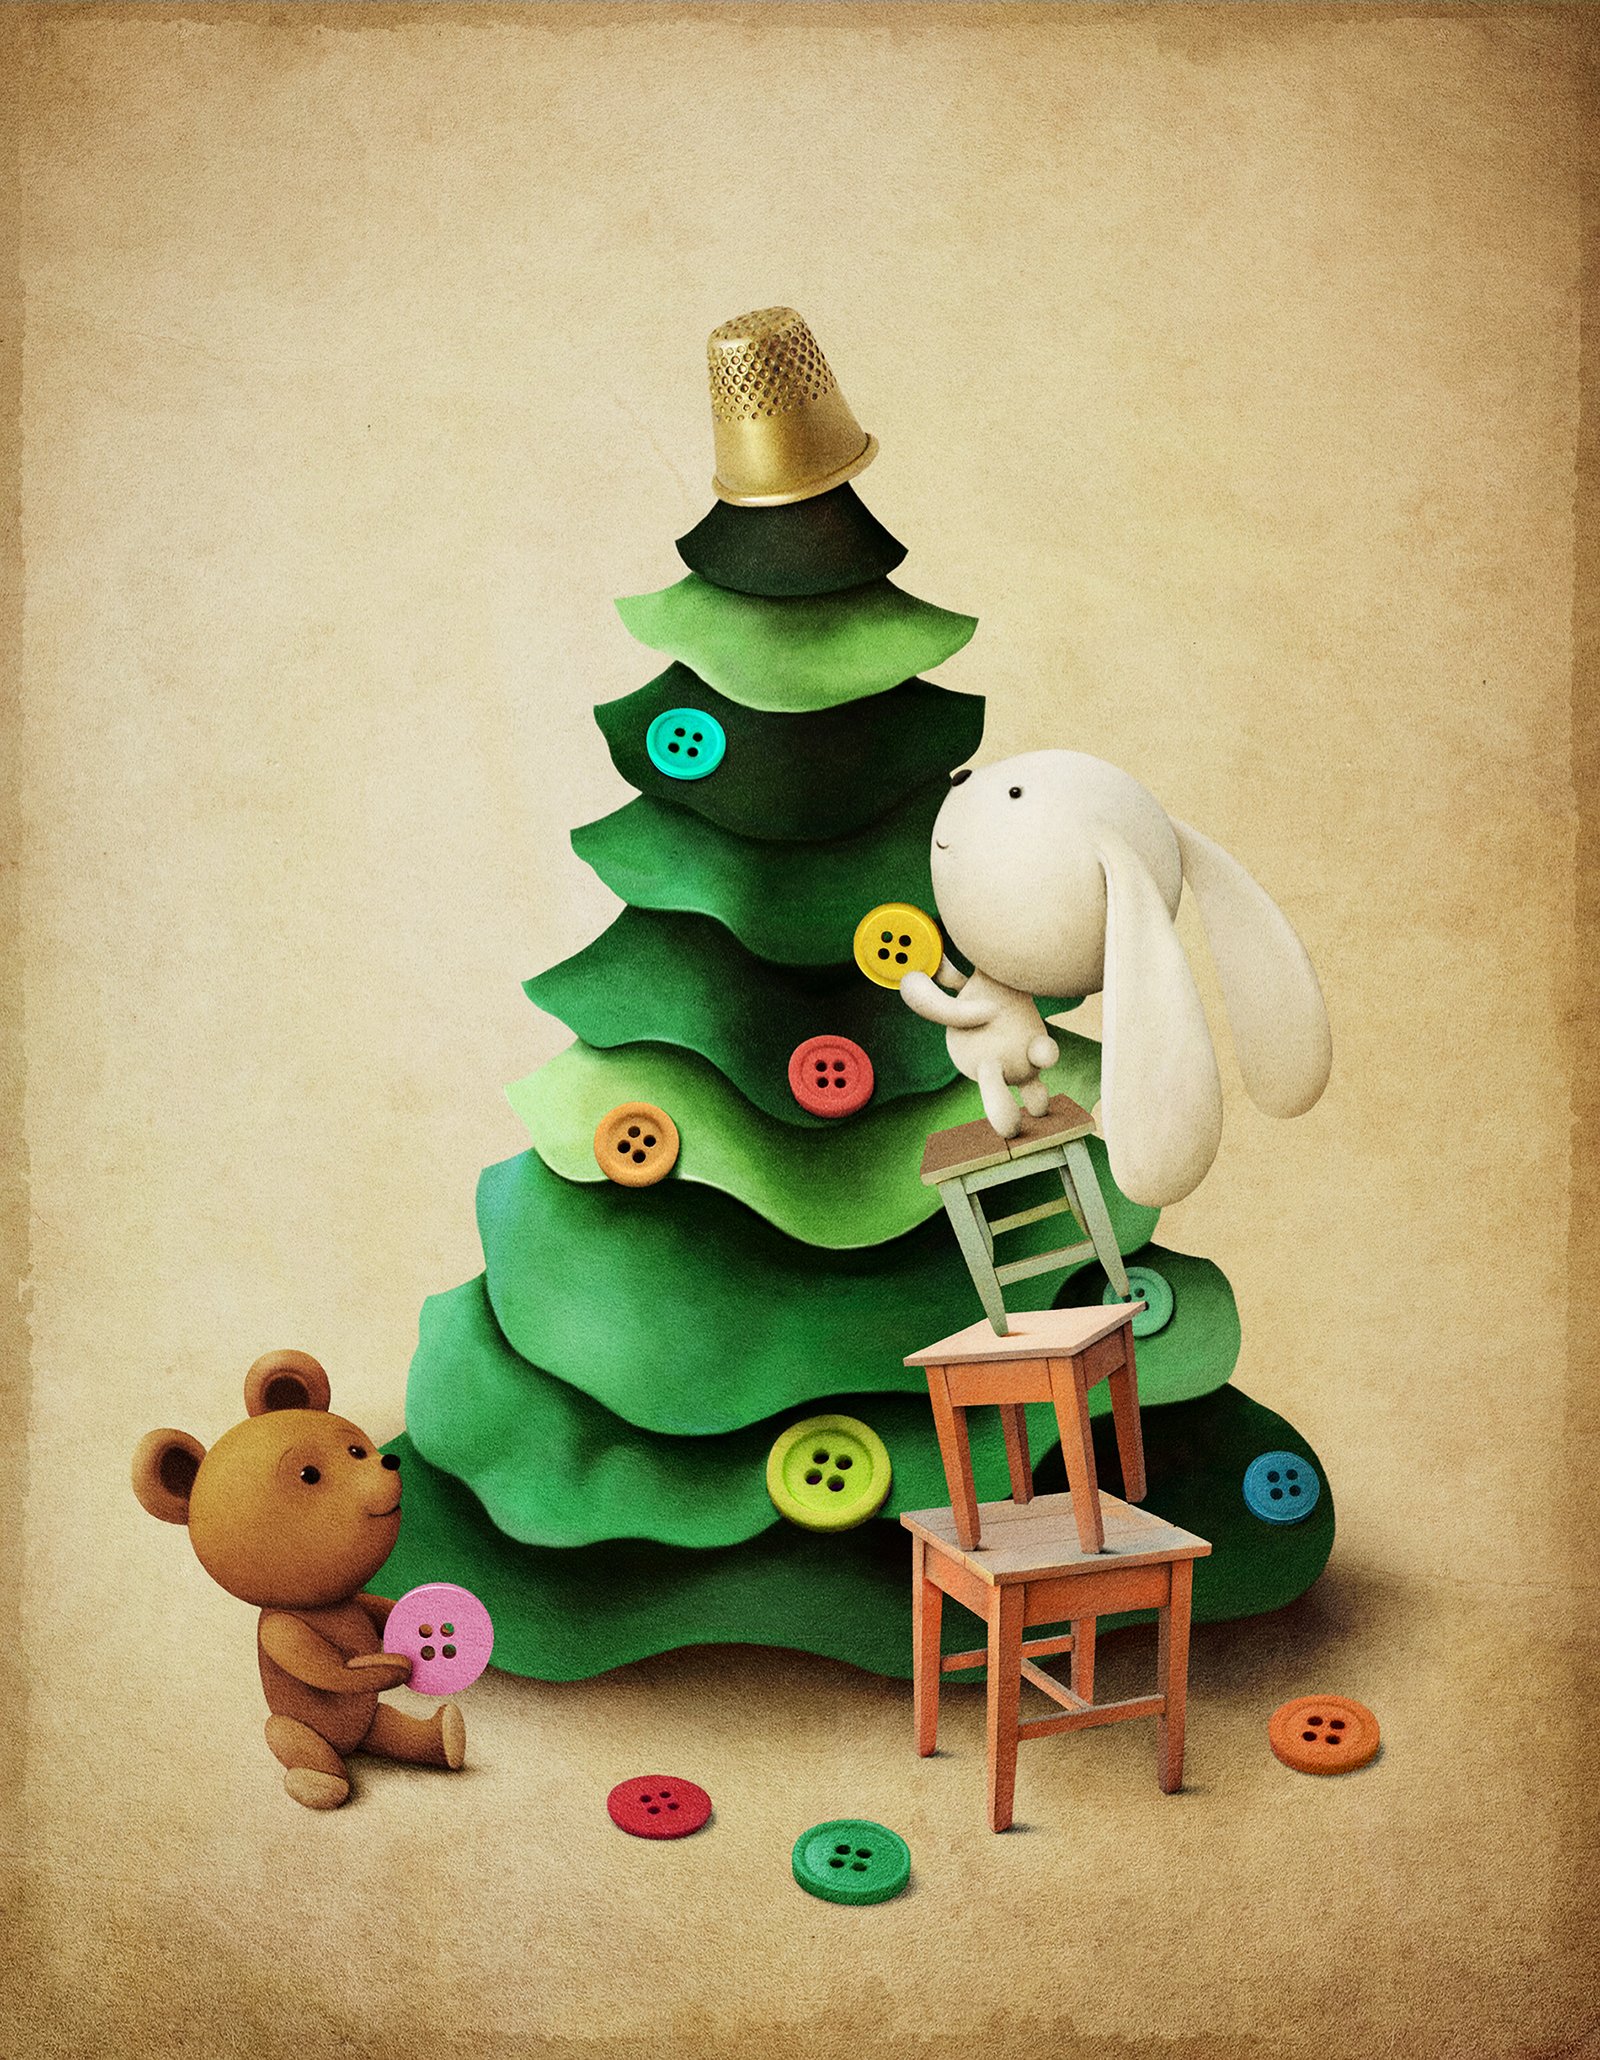 Little bear bunny decorating christmas tree 54628 illustration wallpaper